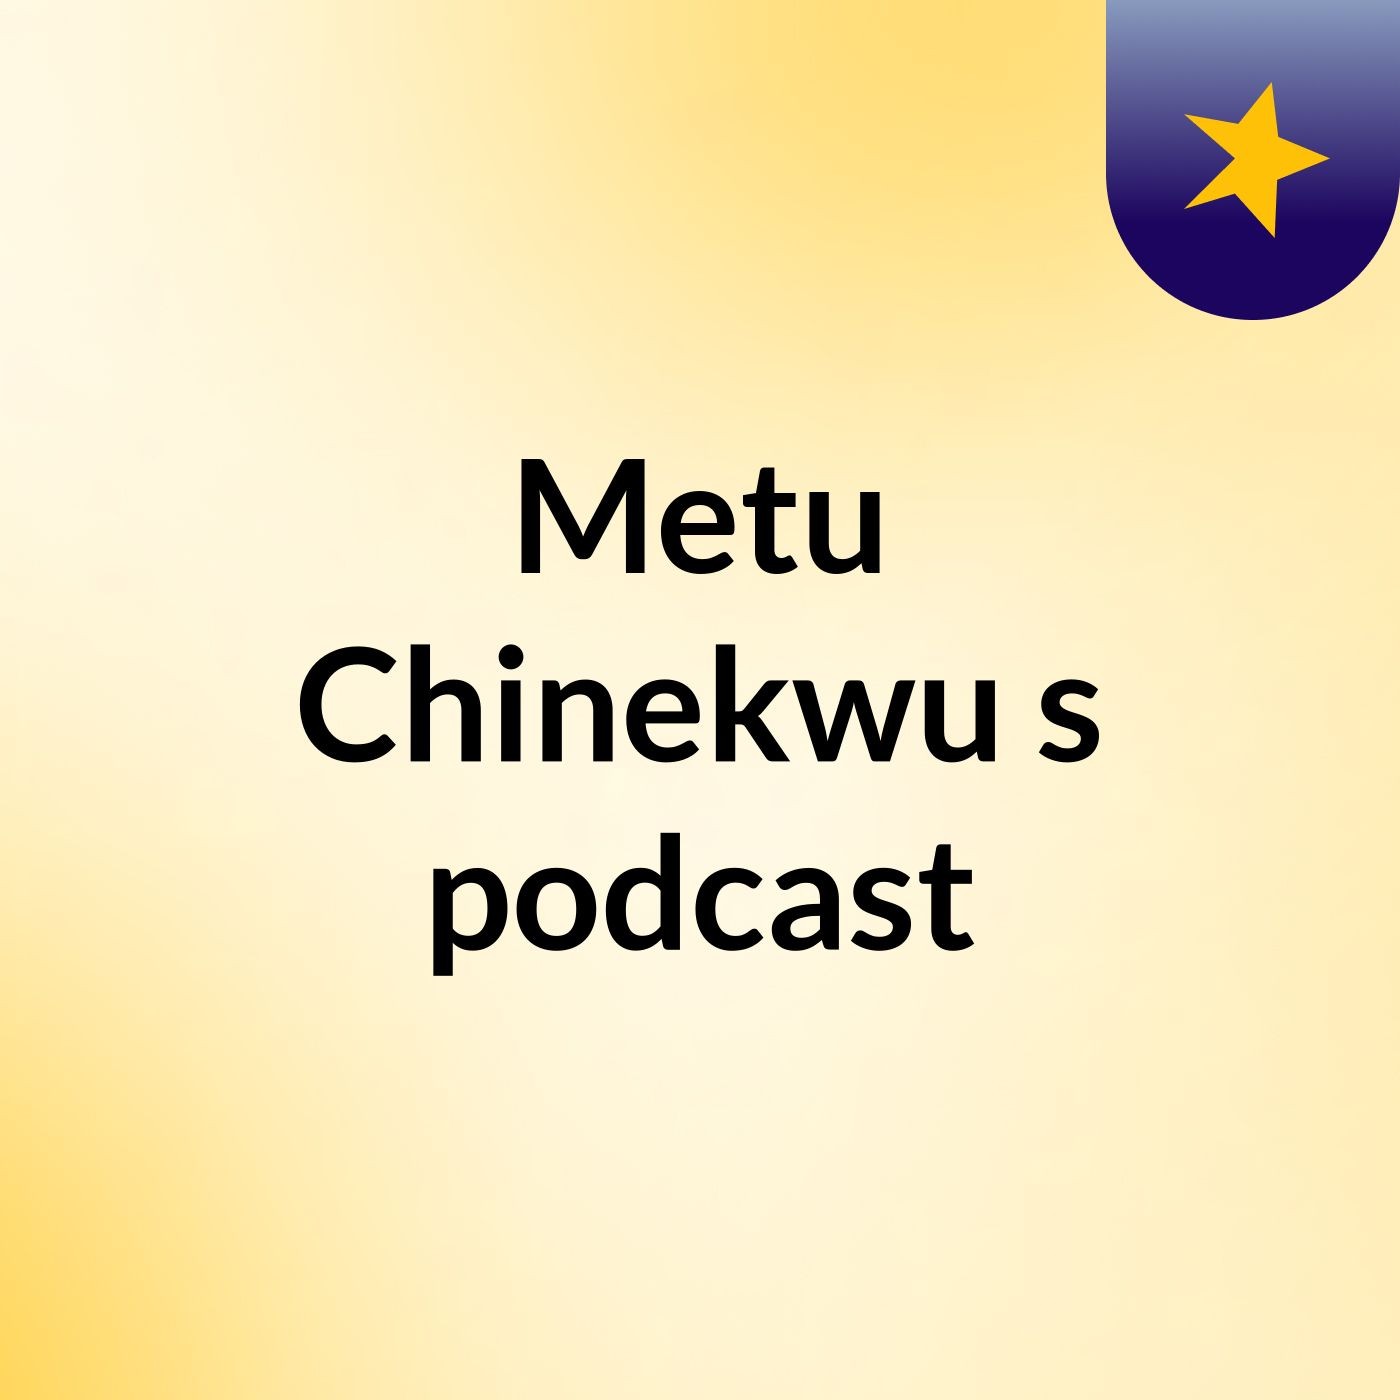 Episode 3 - Metu Chinekwu's podcast